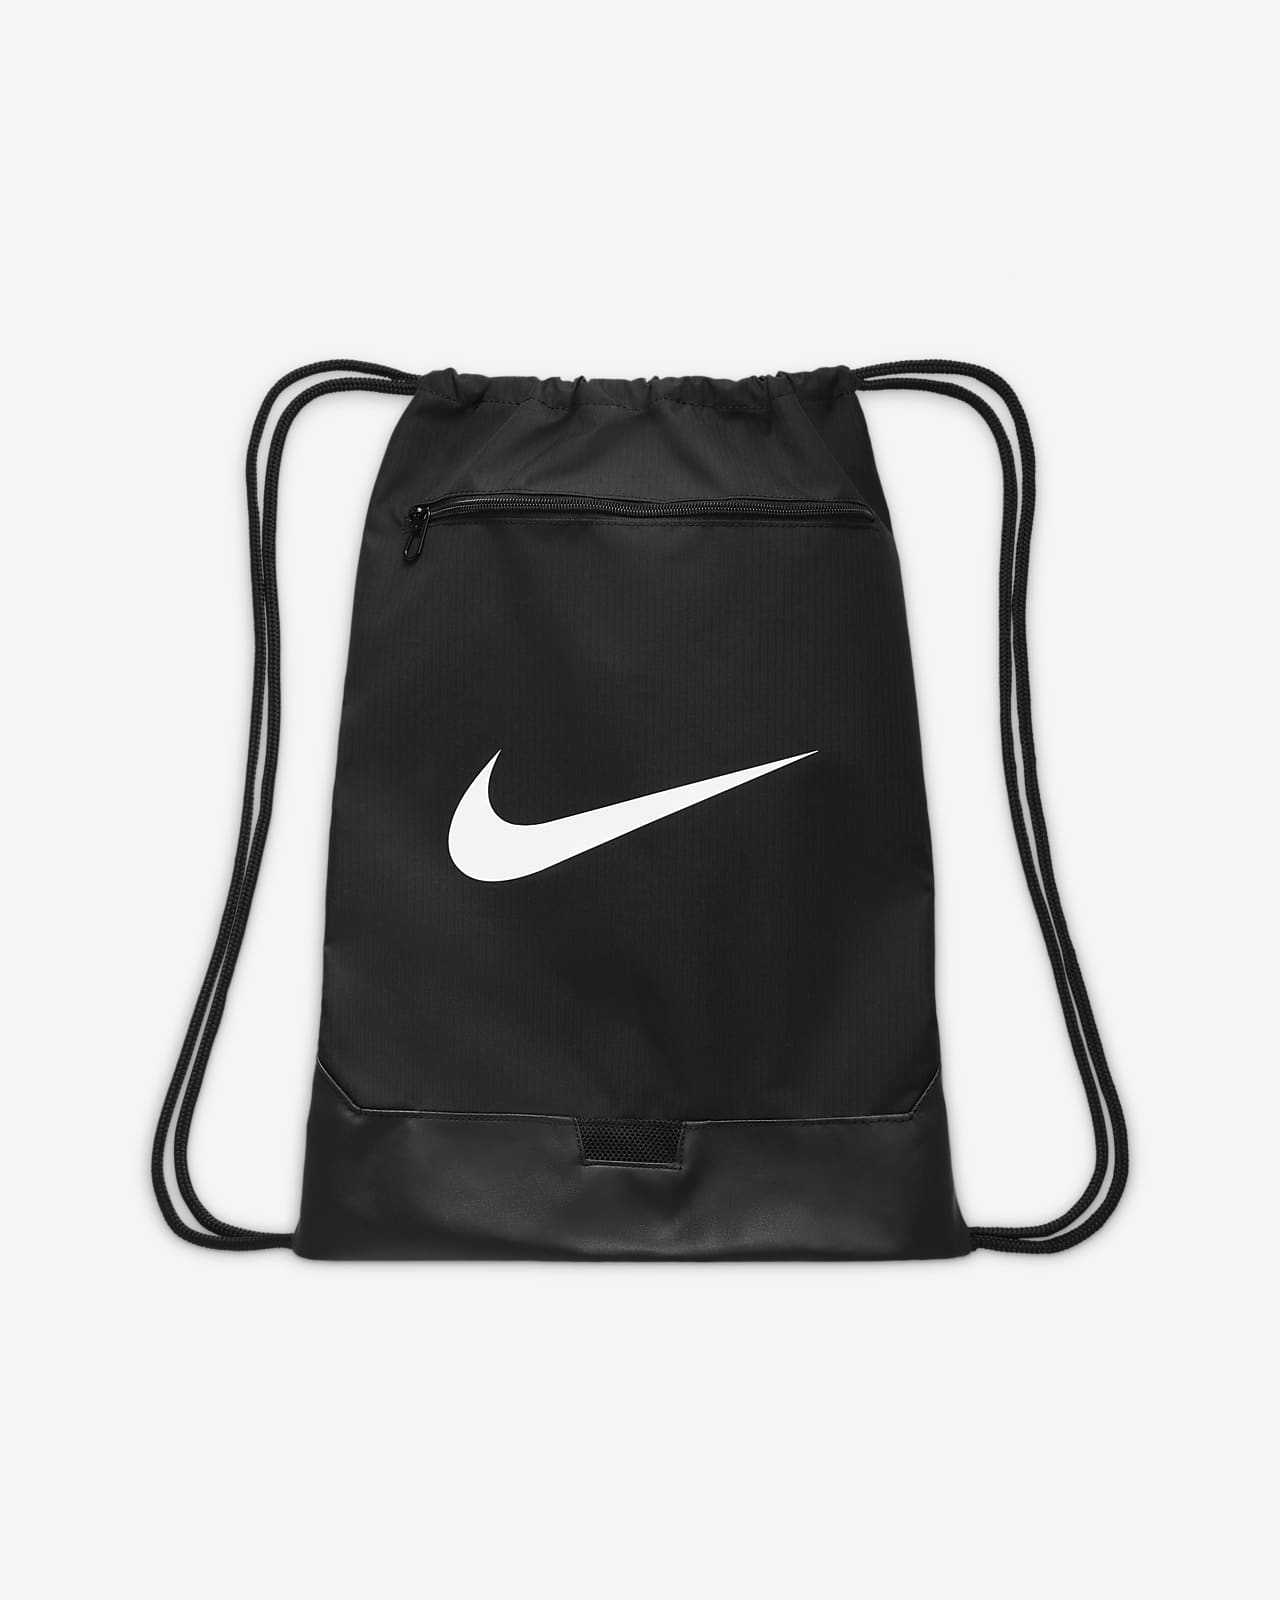 Nike Brasilia 9.5 Training Duffel Bag Large Size 95 Litre Sportswear Gym  School